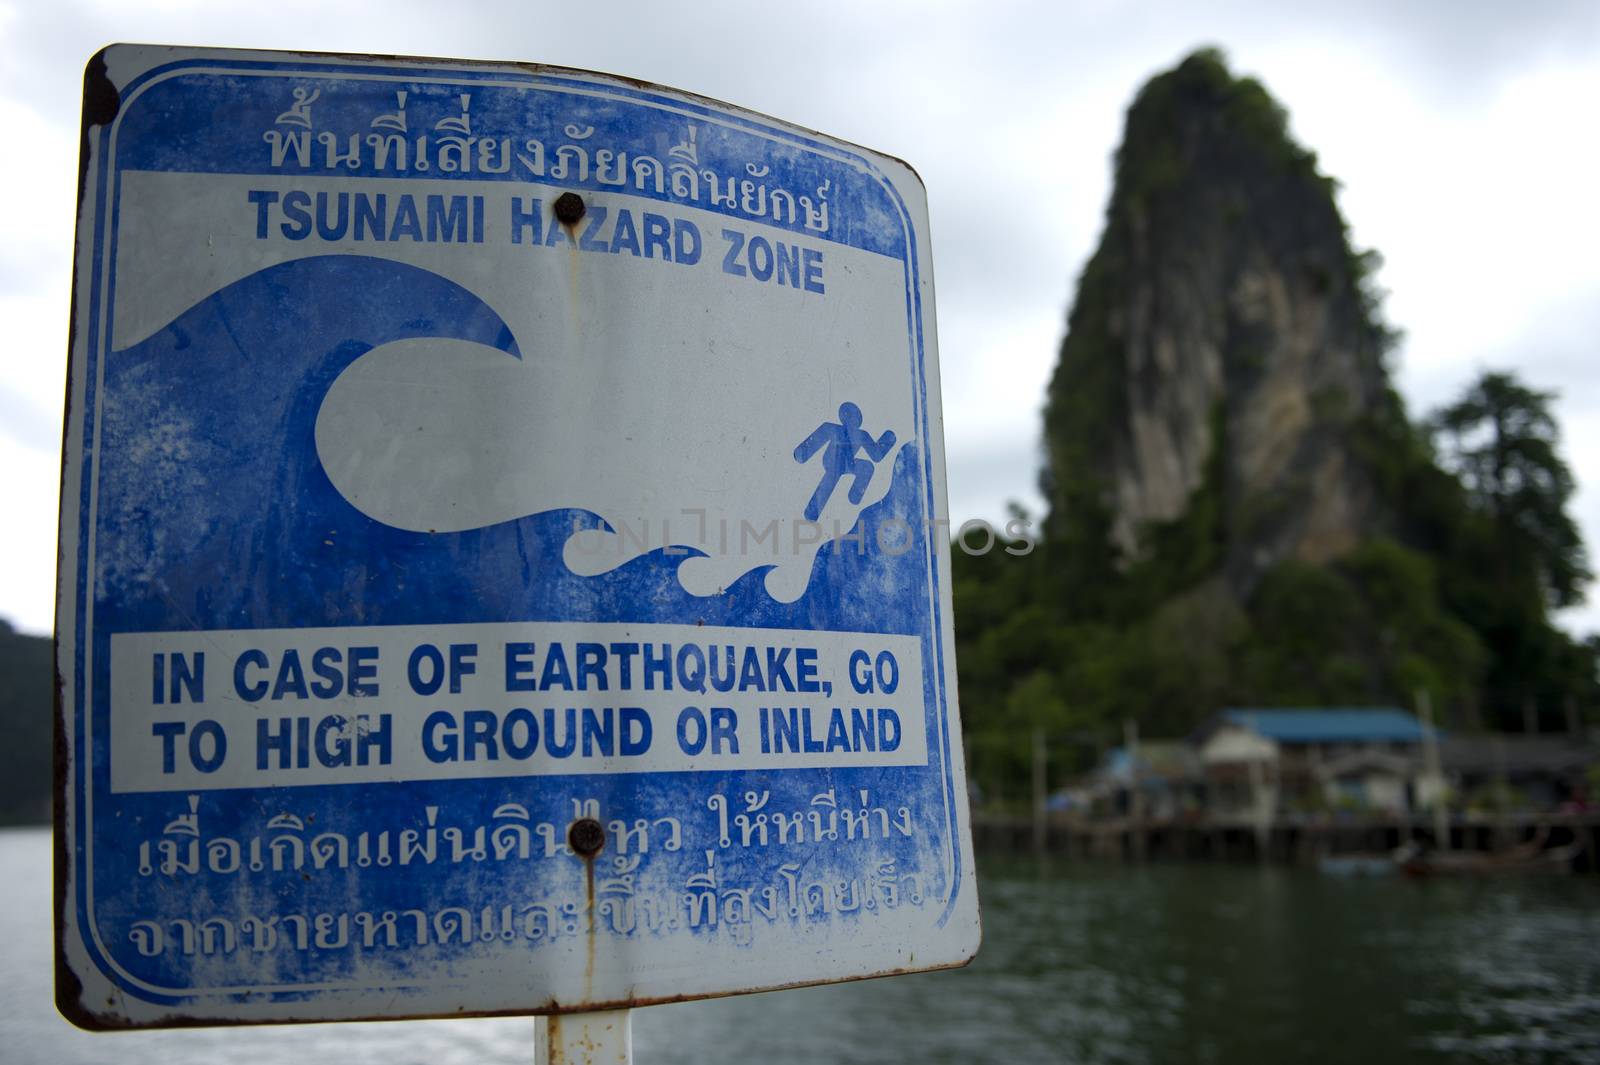 Sign pointing towards the tsunami evacuation route